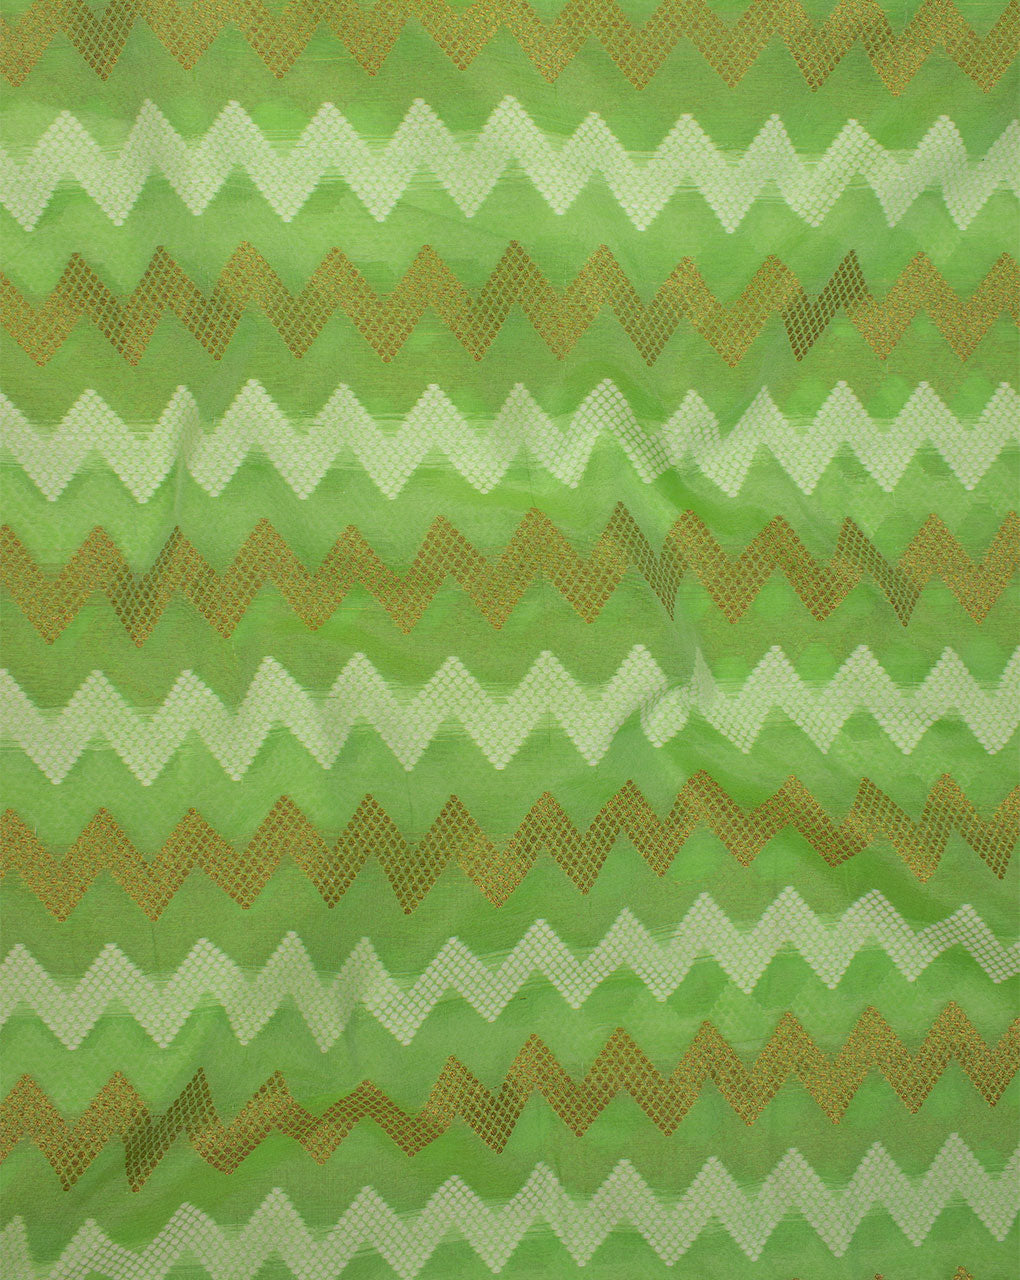 Green White Chevron Pattern Banarasi Zari Jacquard Chanderi Fabric - Fabriclore.com